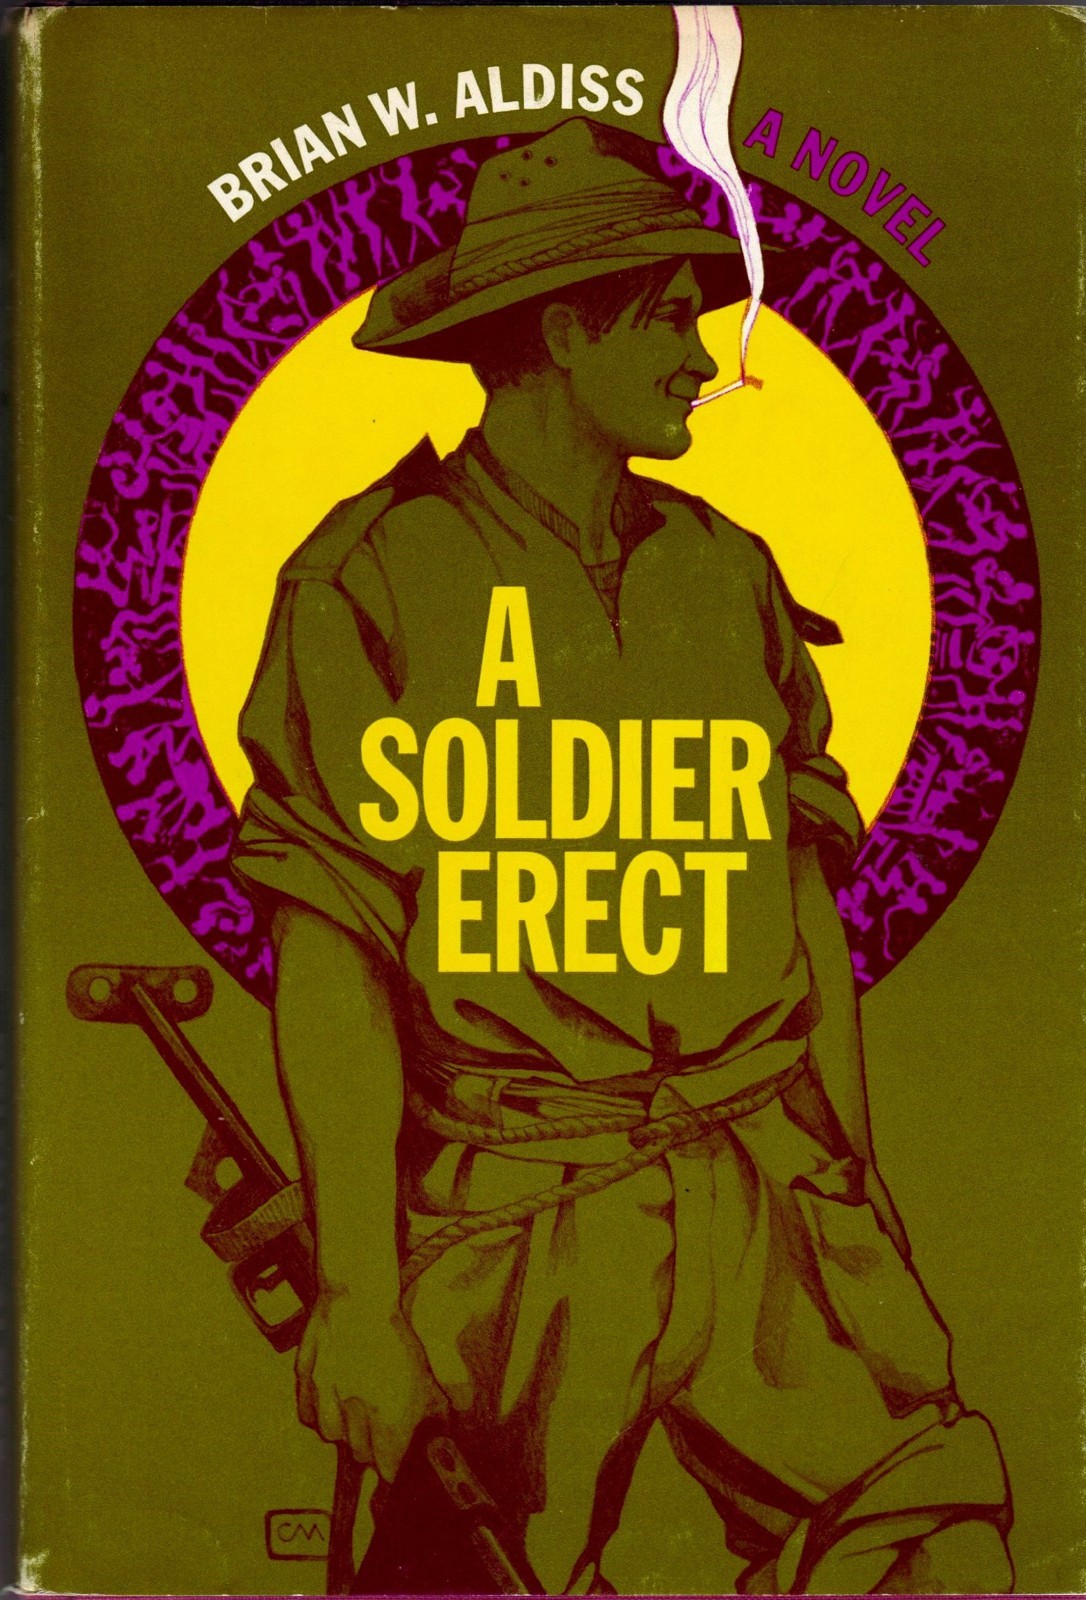 A Soldier Erect